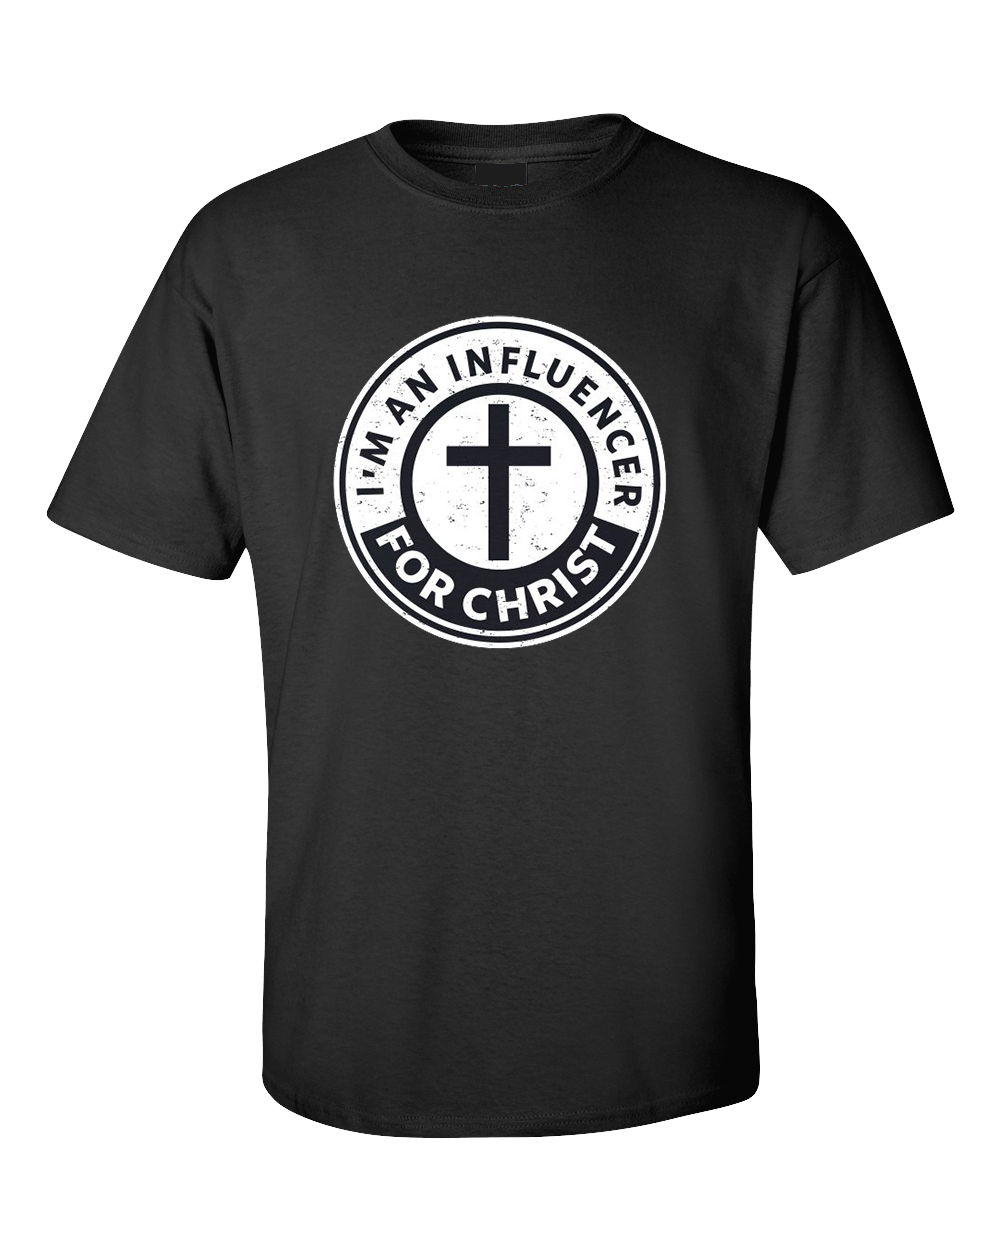 I'm an Influencer for Christ Tshirt